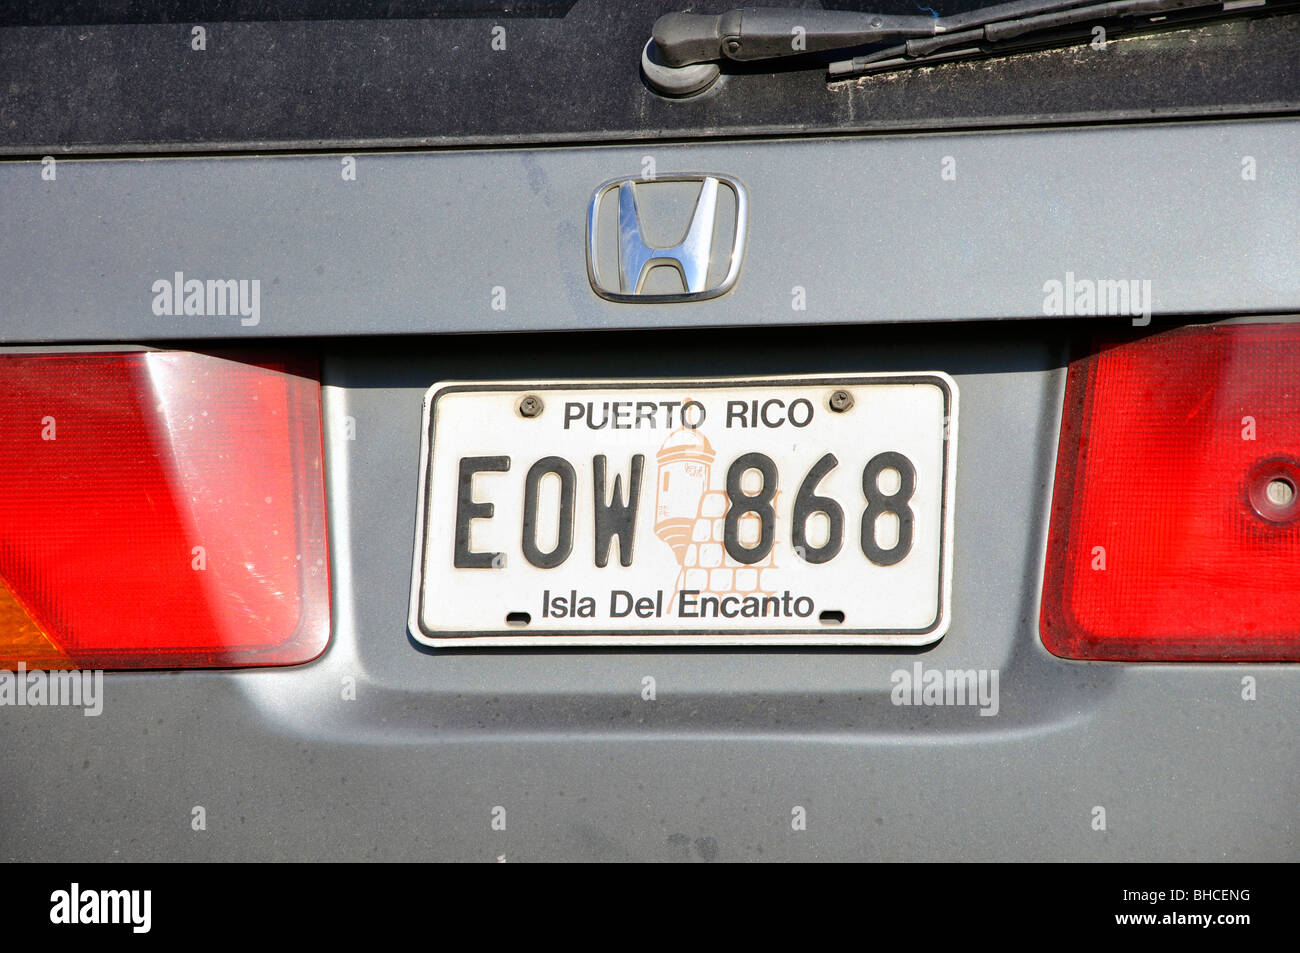 Puerto Rico license plate Stock Photo - Alamy